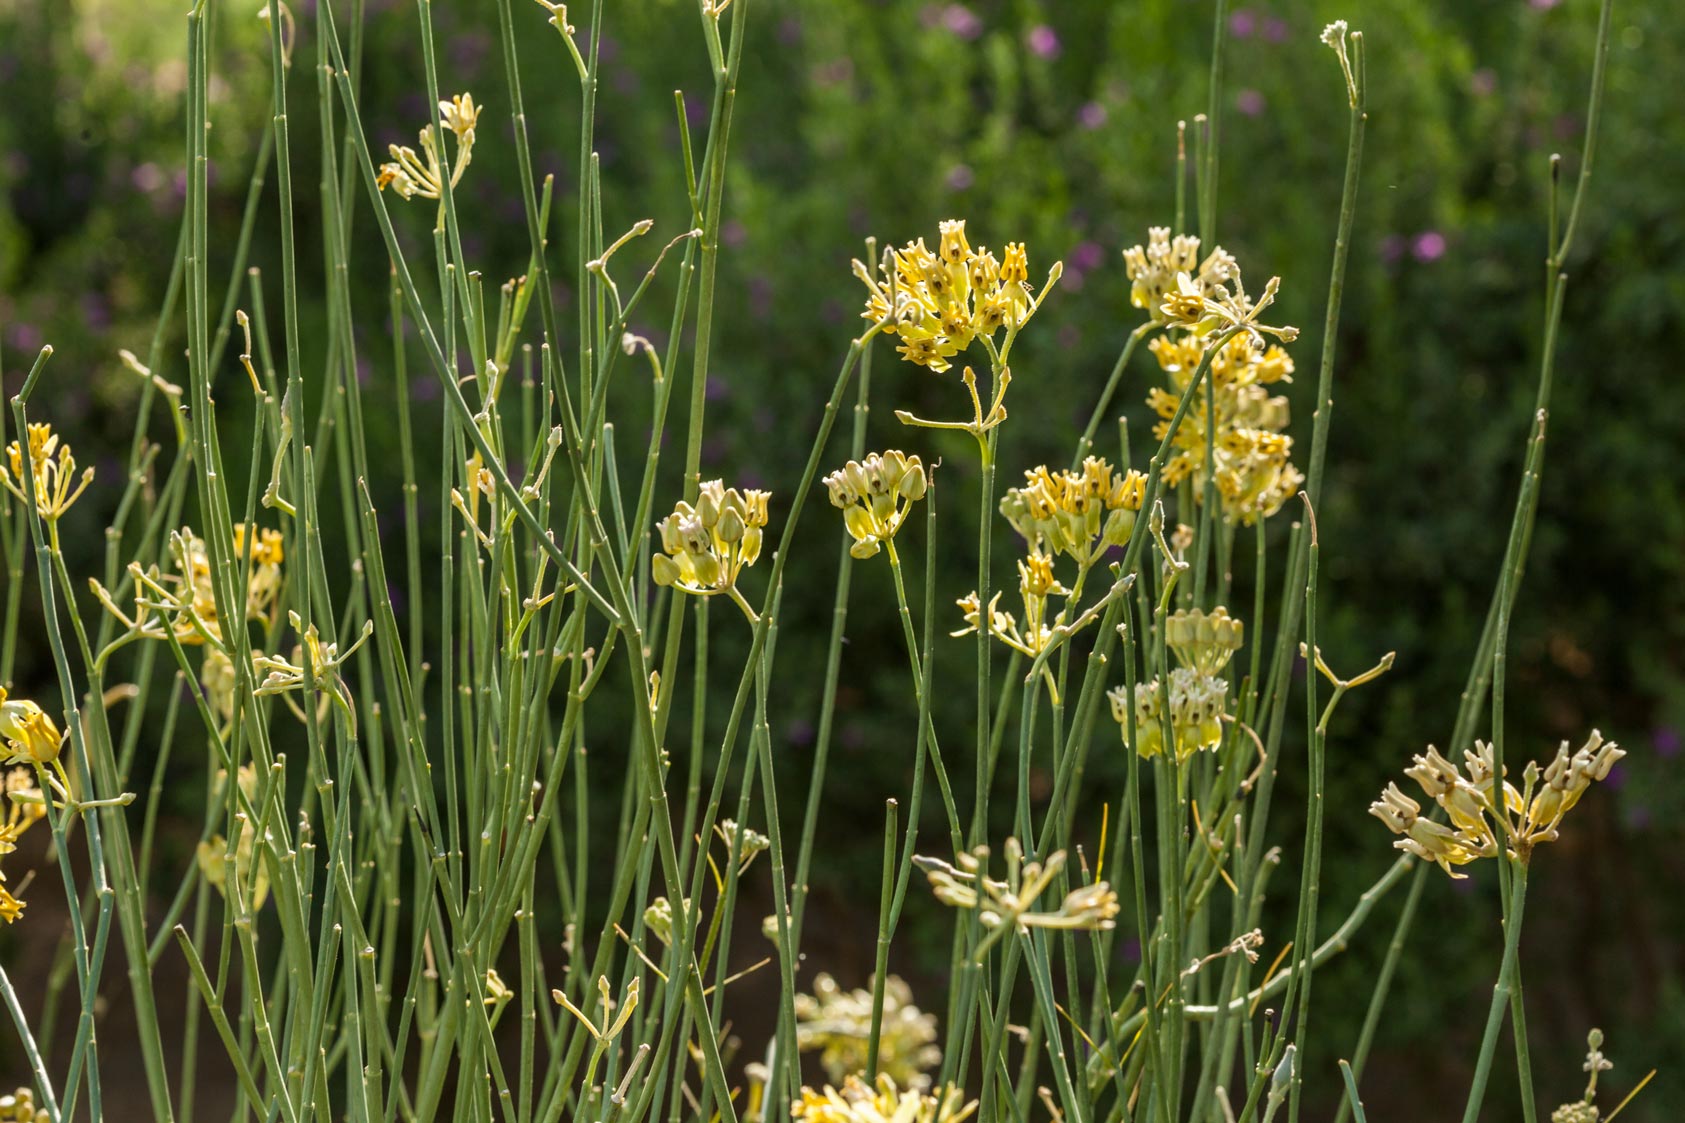 A close-up of Desert Milkweed flowers.